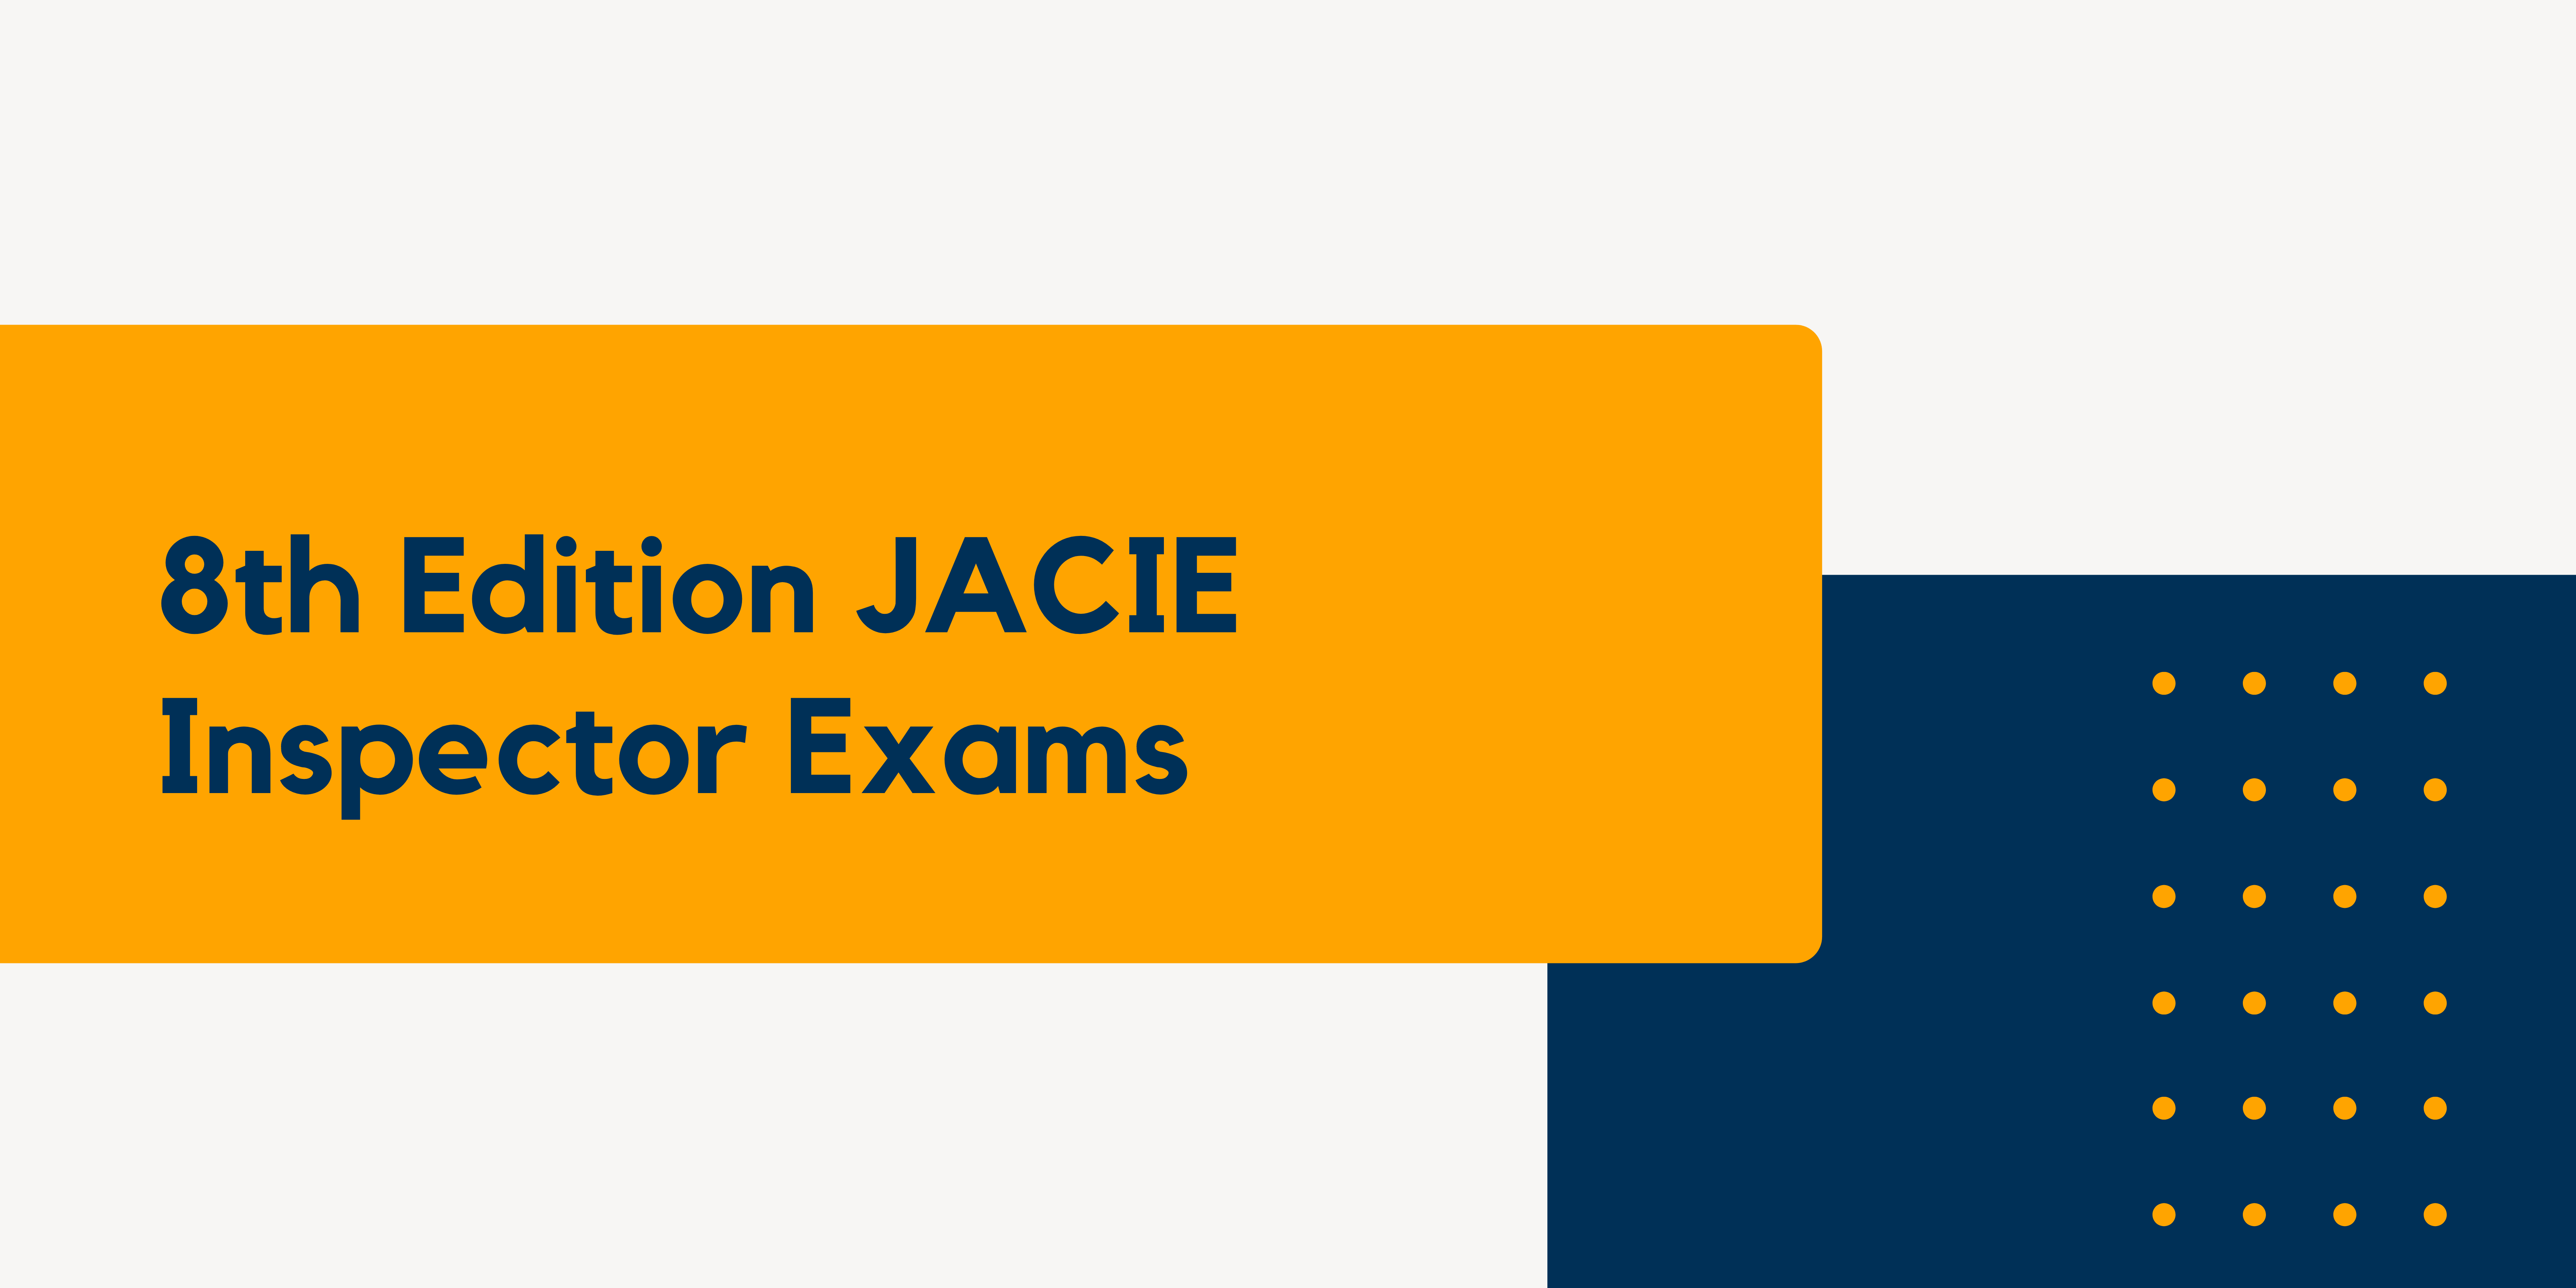 8th Edition JACIE Inspector Exams